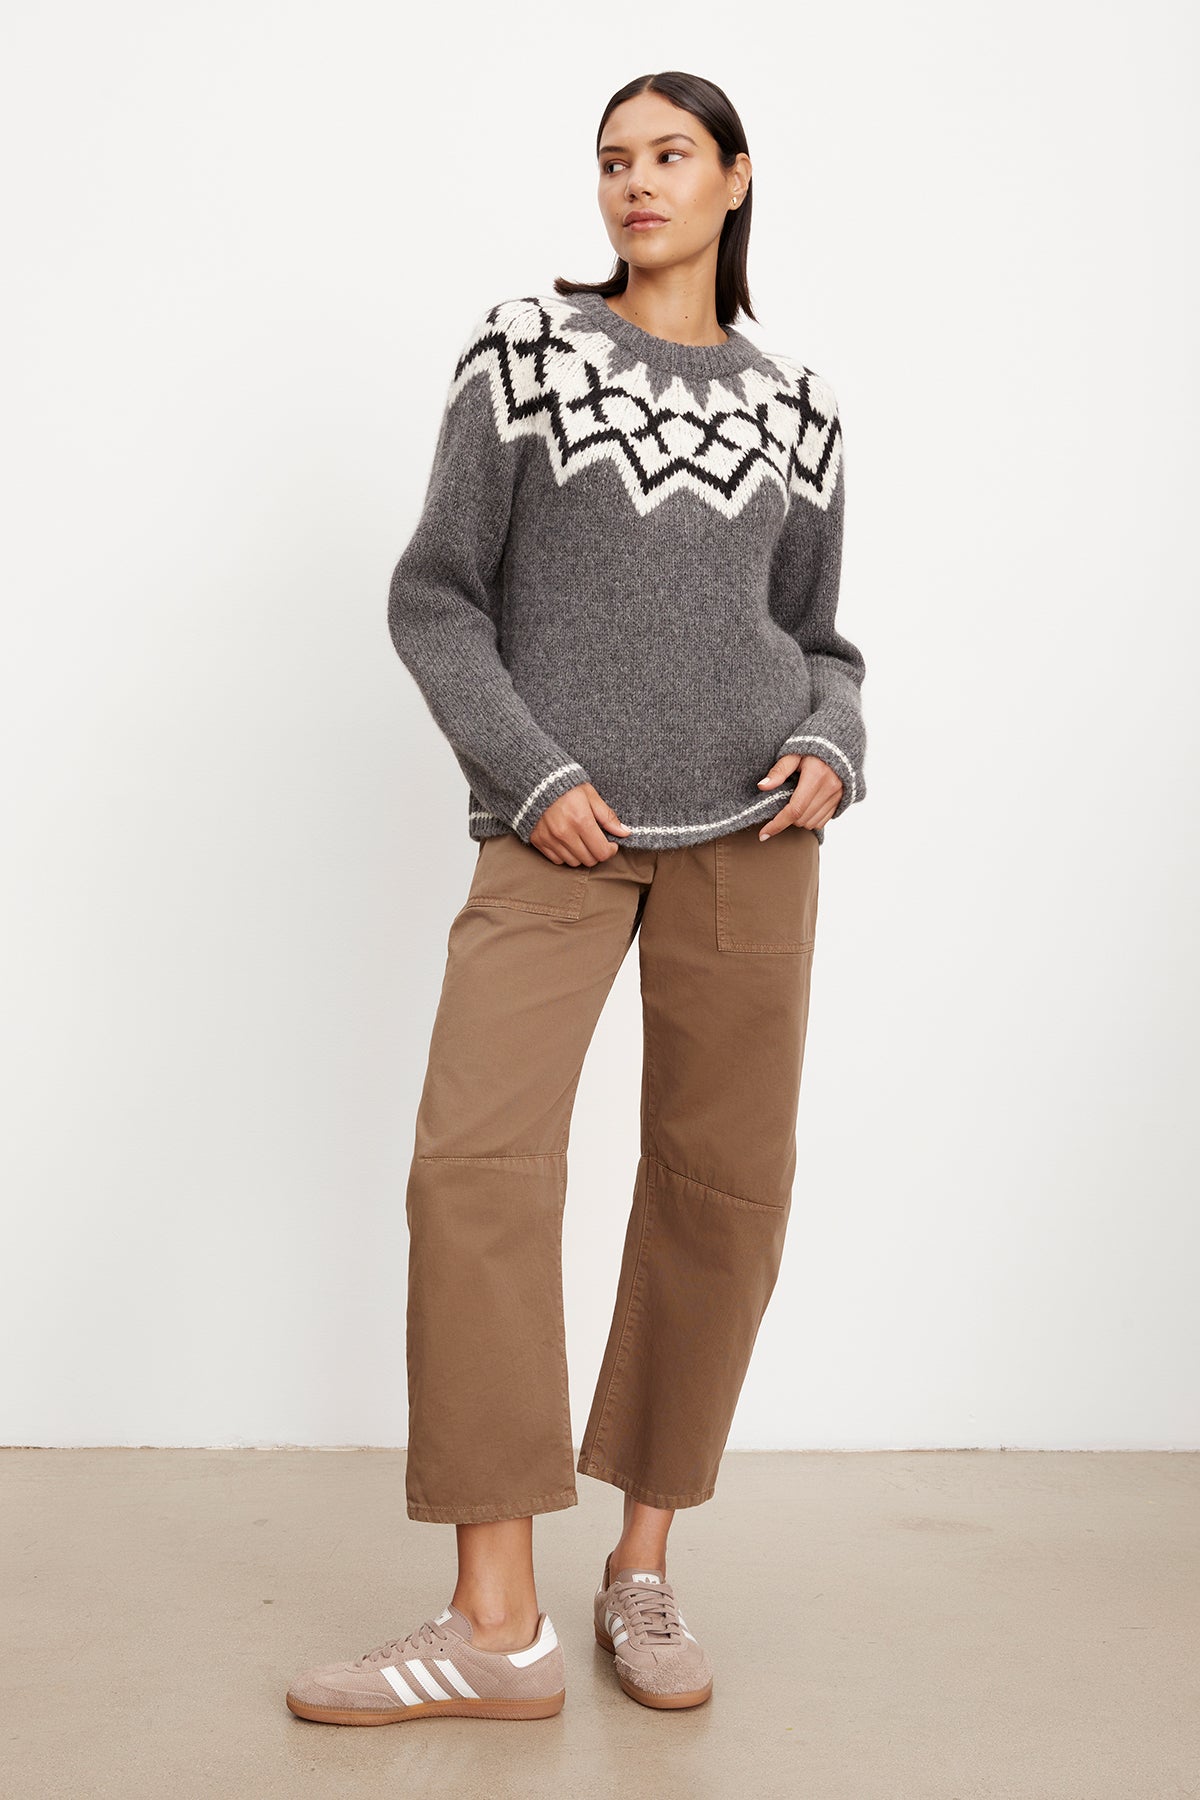   The model is wearing a grey Velvet by Graham & Spencer Alexa Fair Isle Crew Neck sweater. 